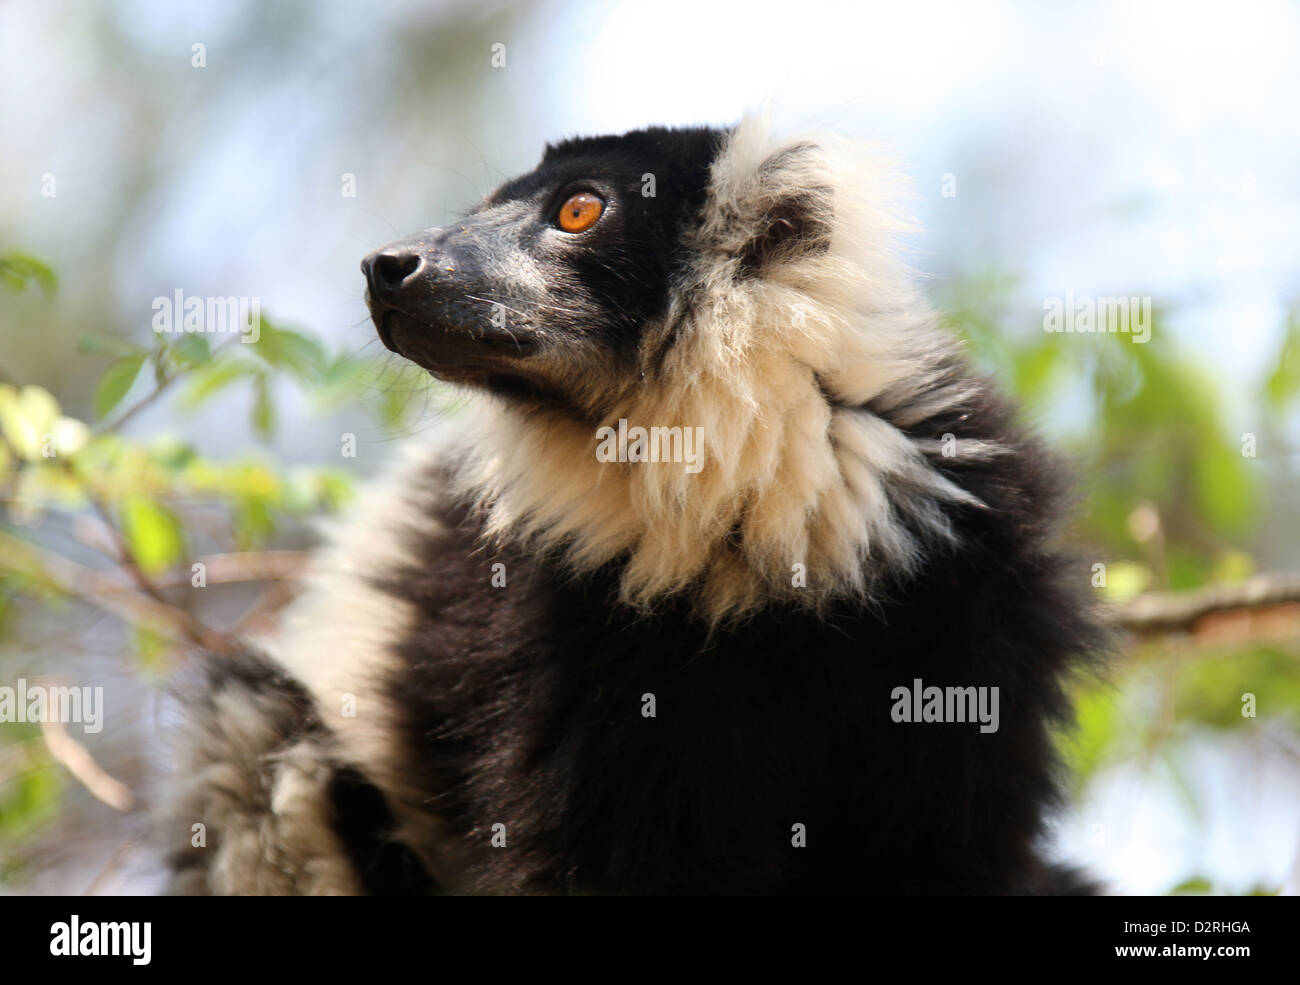 Black and White Ruffed Lemur, Varecia variegata, Lemurinae, Lemuridae, Primates. Madagascar, Africa. Stock Photo